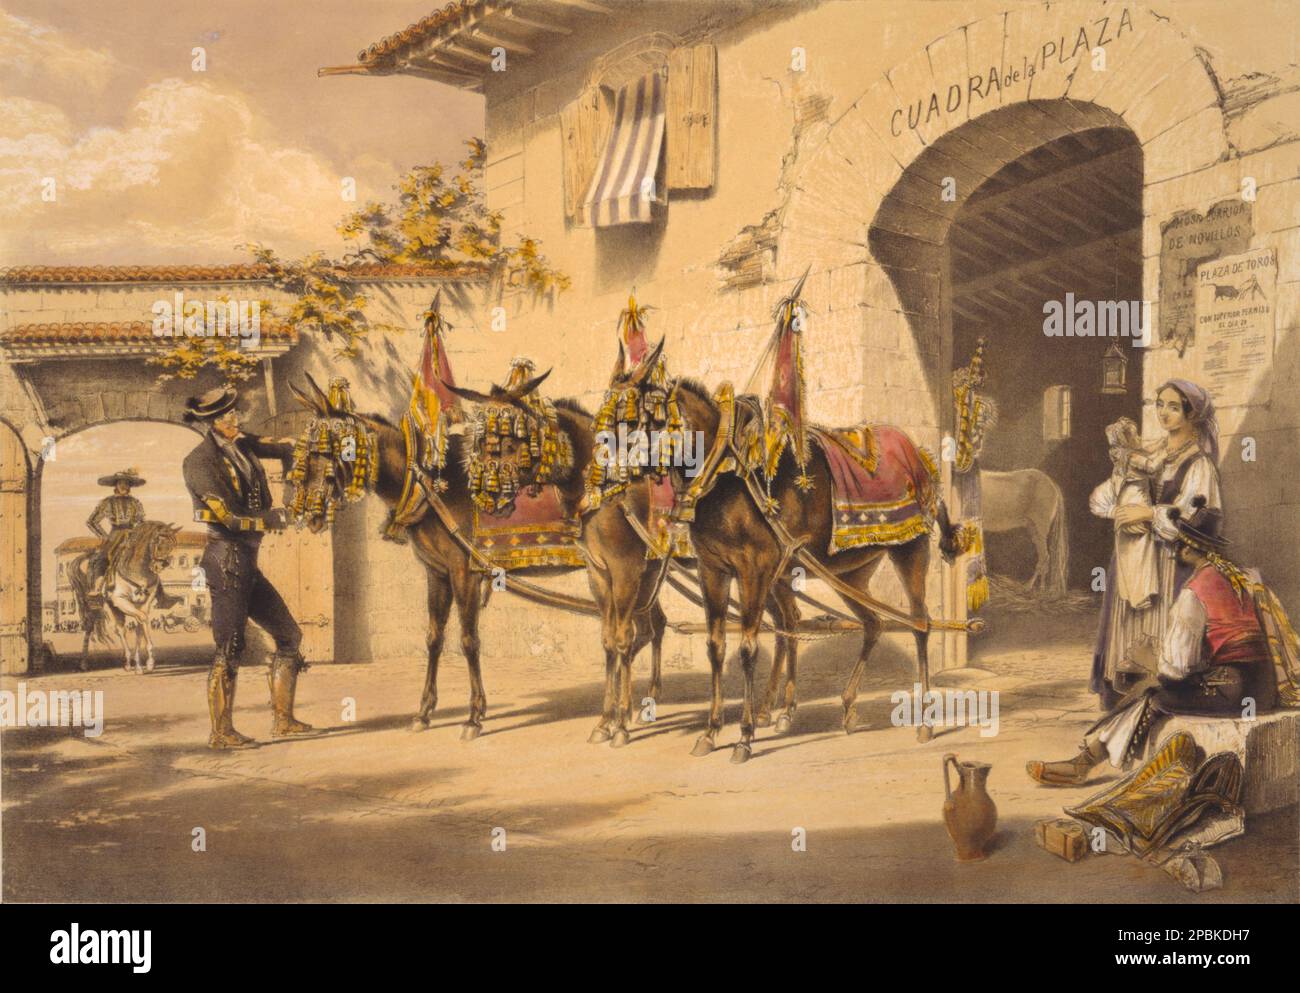 1860 CA : Mules de la Plaza de Toros . Lithographie de couleur par l'artiste peintre américain William Henry LAKE PRIX ( 1810 - 1896 ) - TORERO - TORERO - TOREADOR - TORERI - TORO - BULL - CORRIDA - TAUROMACHIA - Spagna - Espagne - ARENA DEI TORI - PLAZA DE TOROS - portrait - ritratto - ARTE - ARTS - gravure - grazione - illustration - illustrateur - illustrateur - - - - - ---- Archivio GBB Banque D'Images